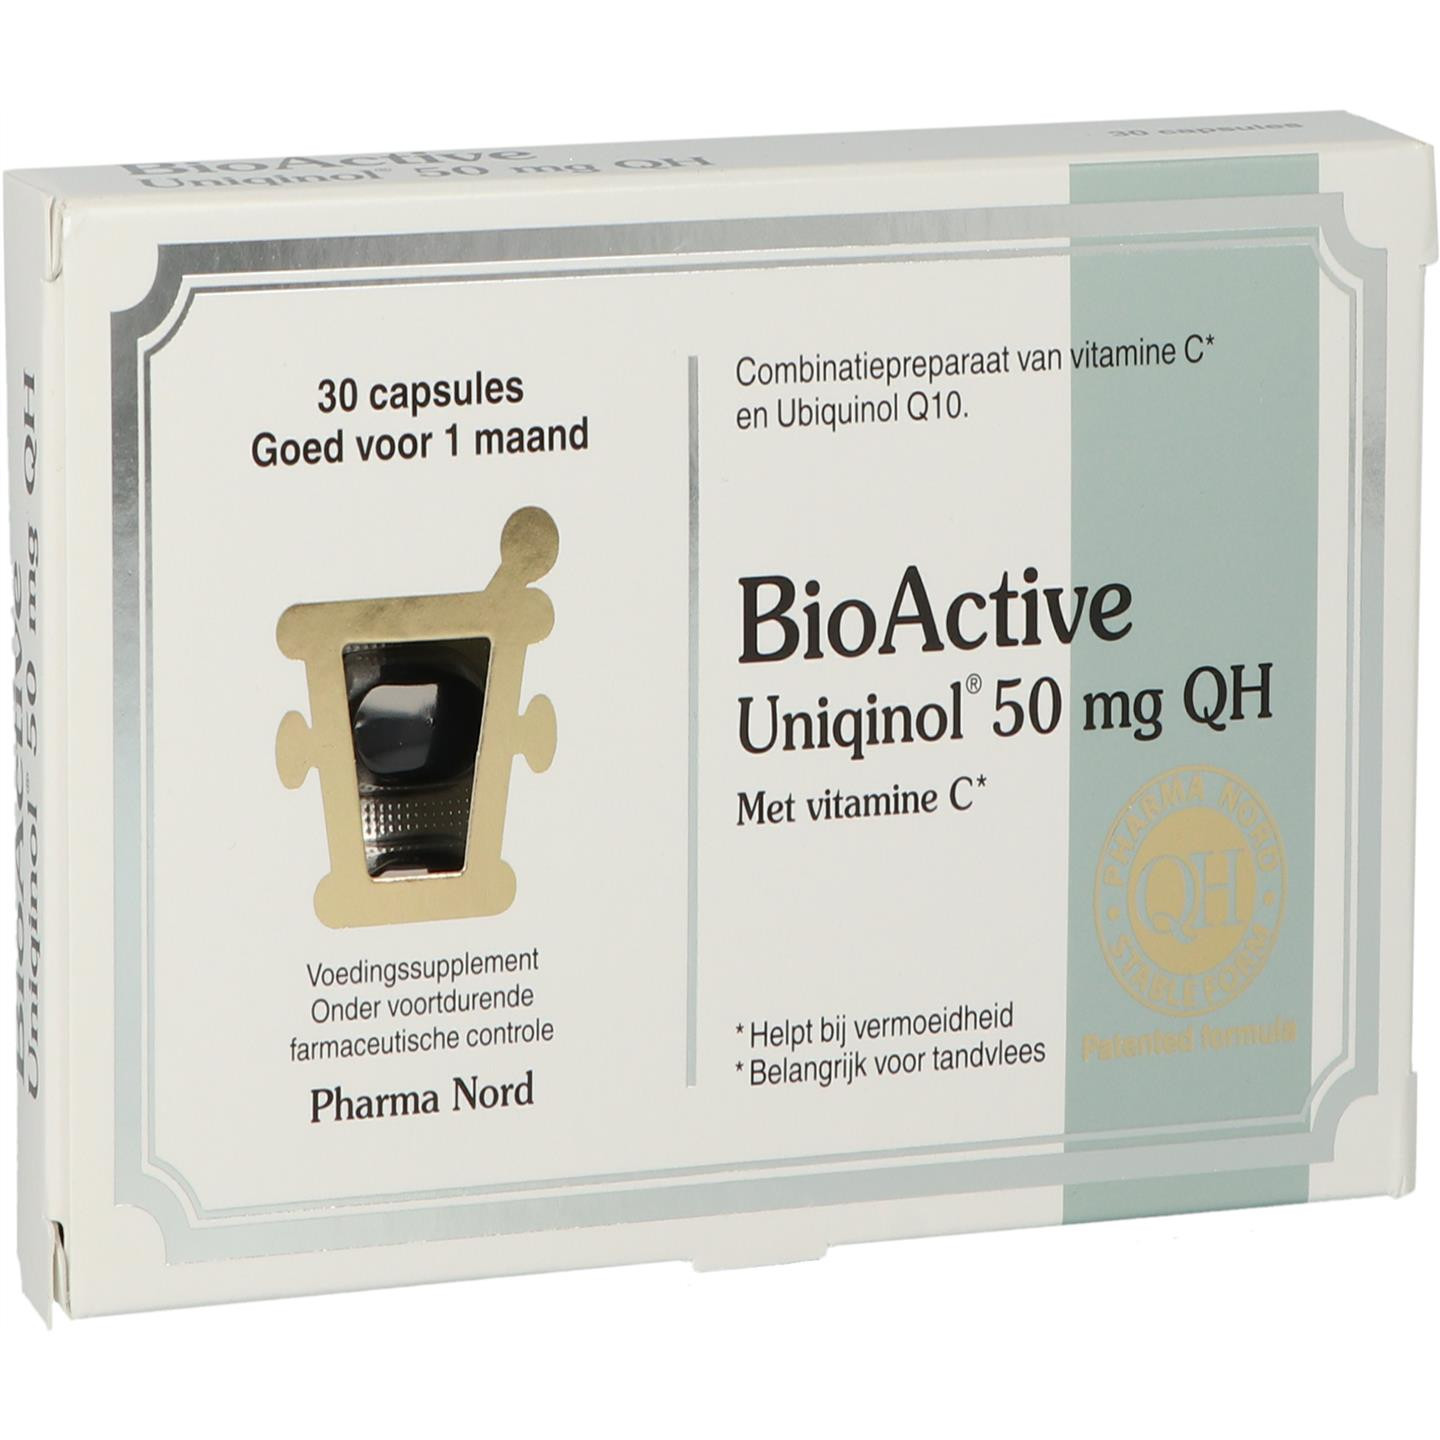 BioActive Uniqinol 50 mg QH